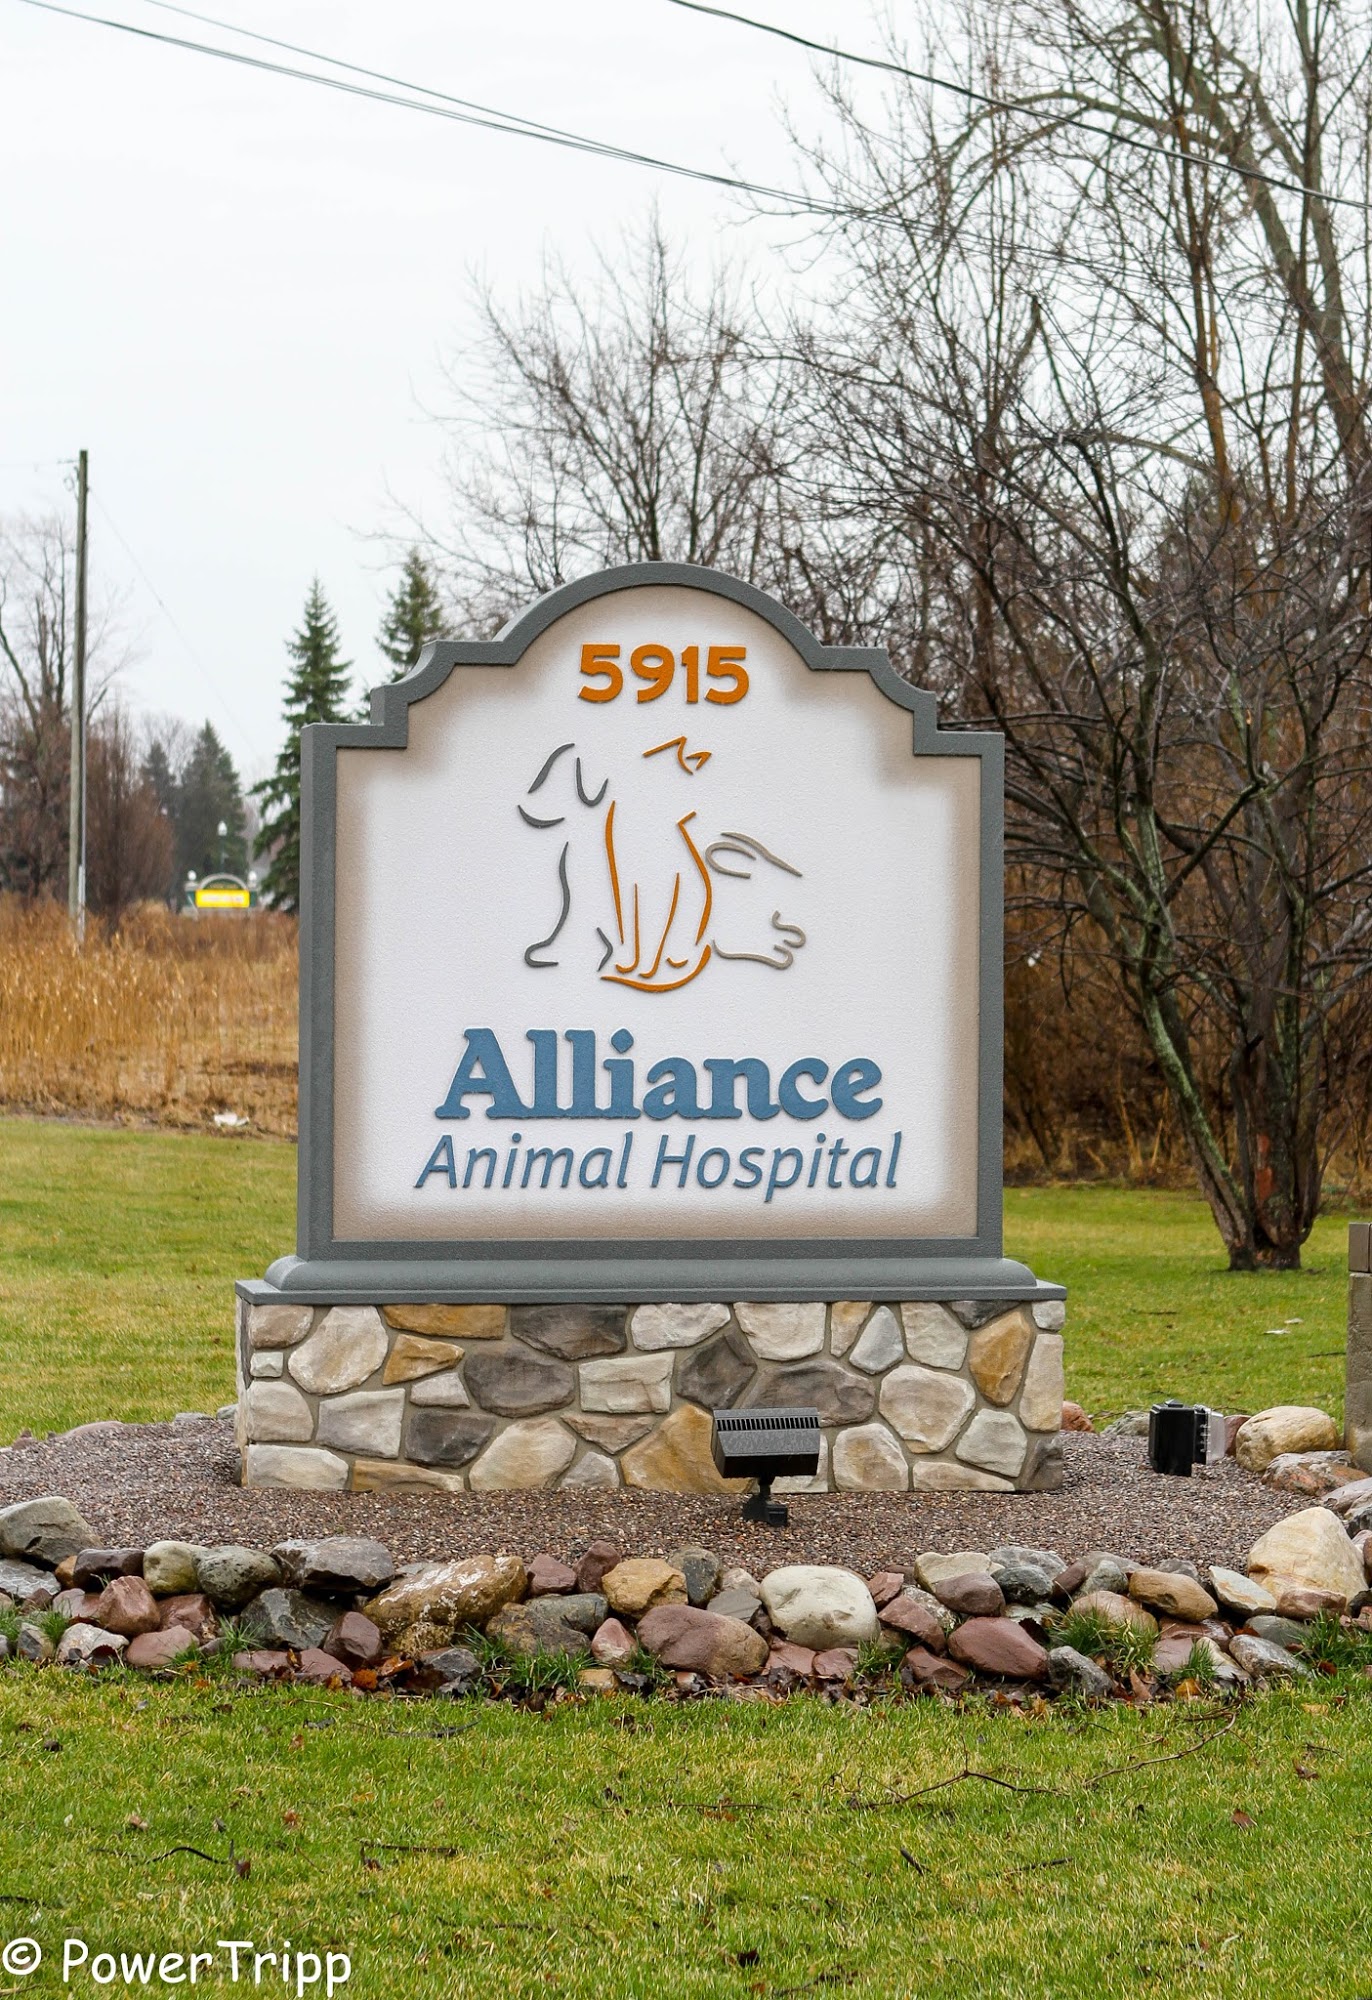 Alliance Animal Hospital